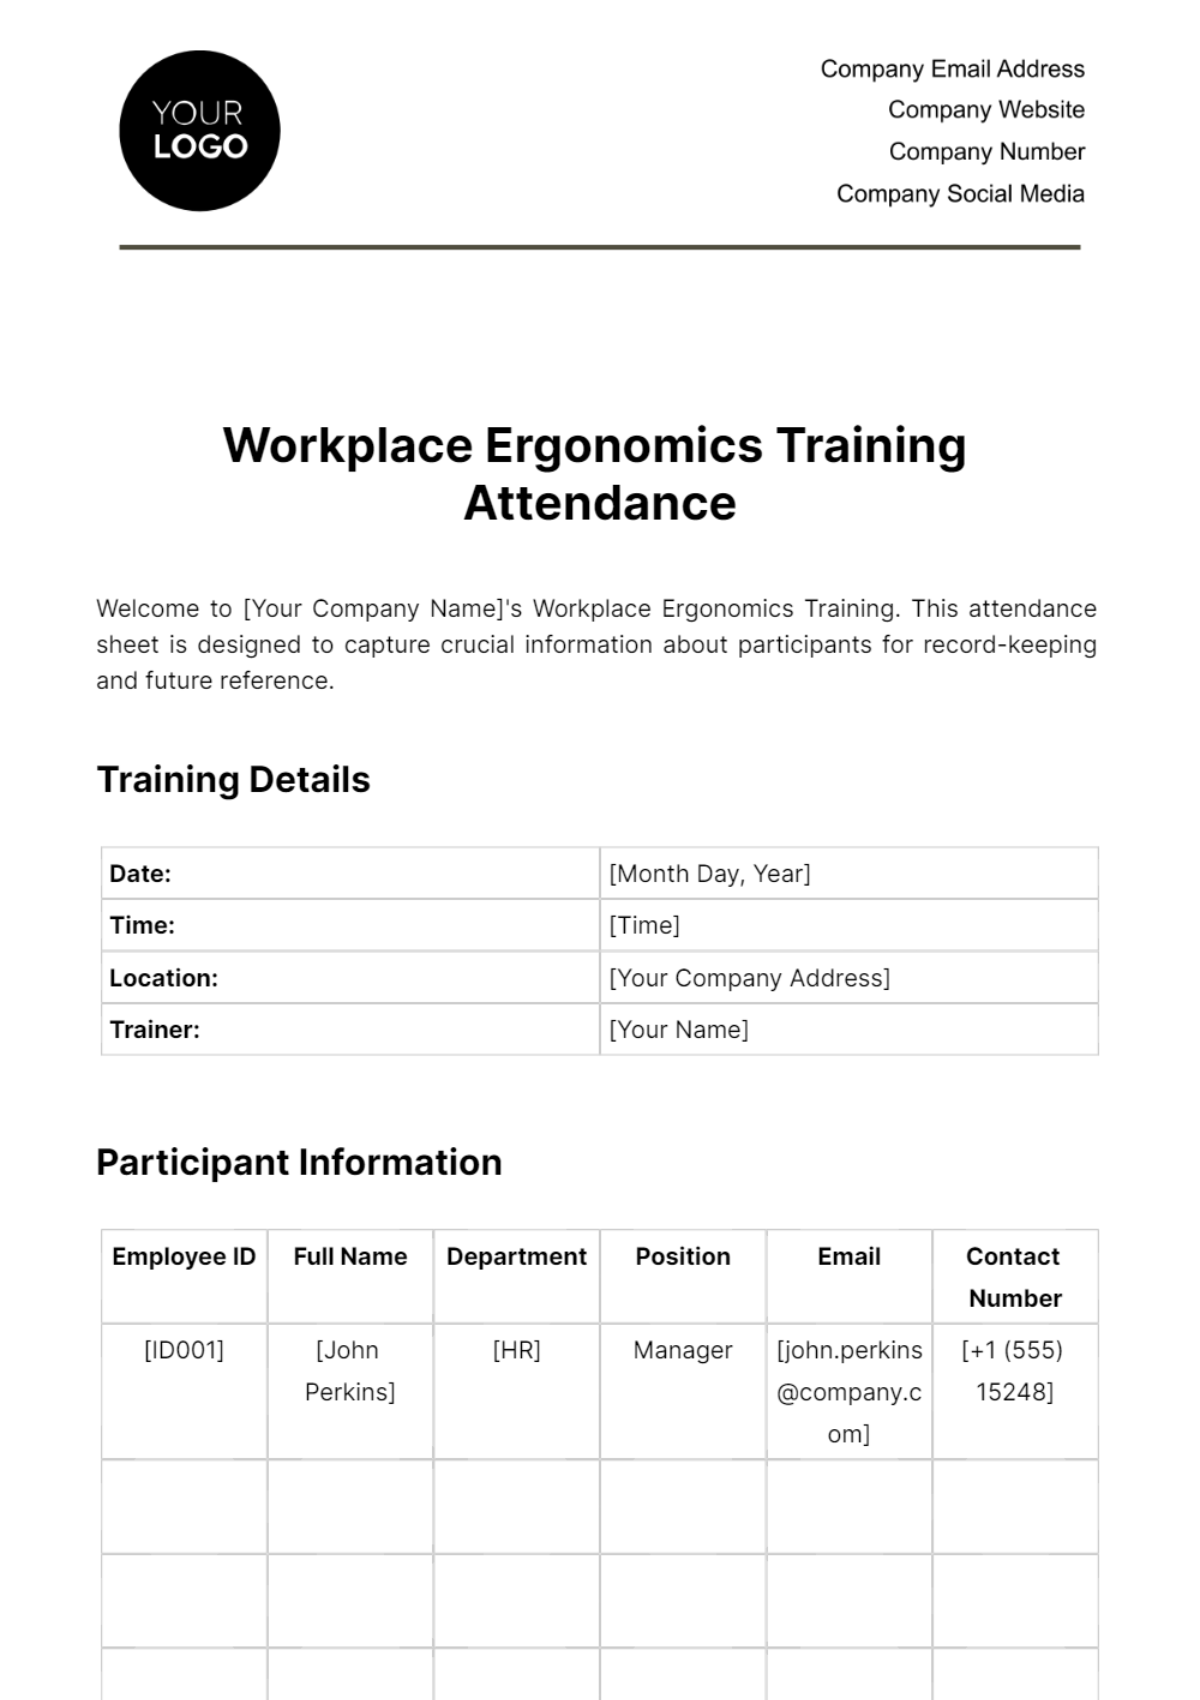 Free Workplace Ergonomics Training Attendance Template